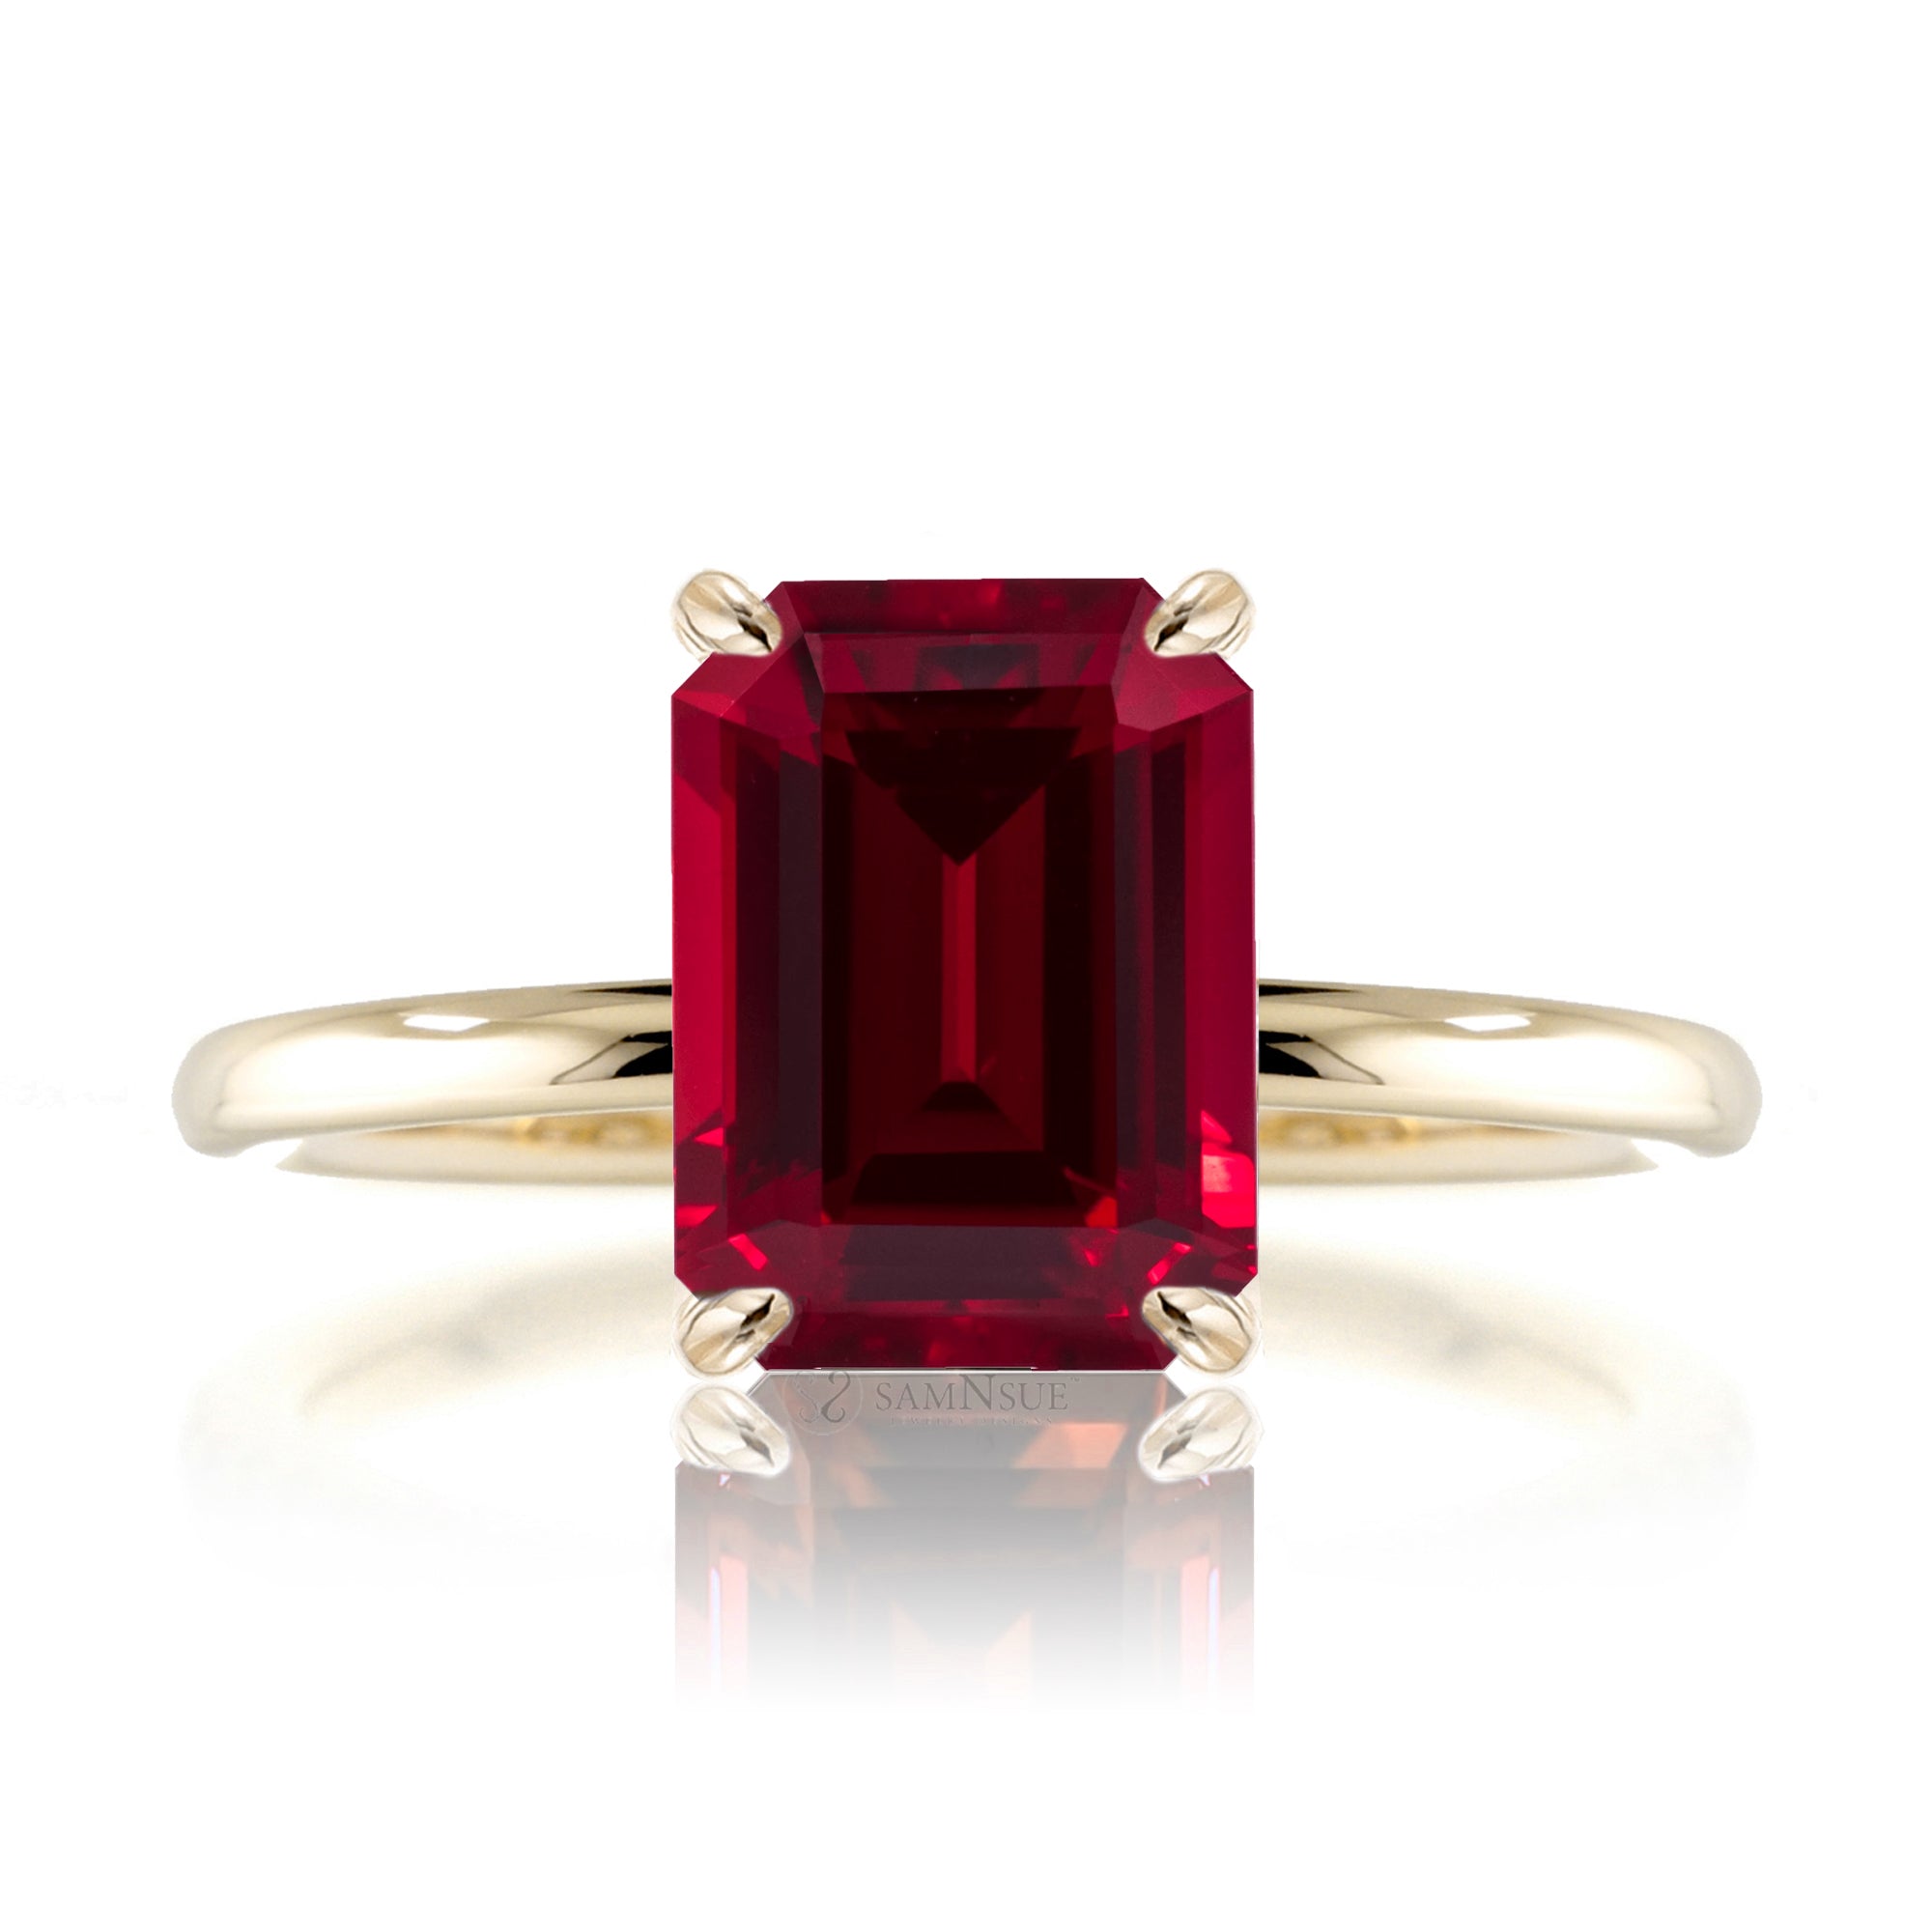 Emerald cut ruby diamond engagement ring yellow gold - the Ava